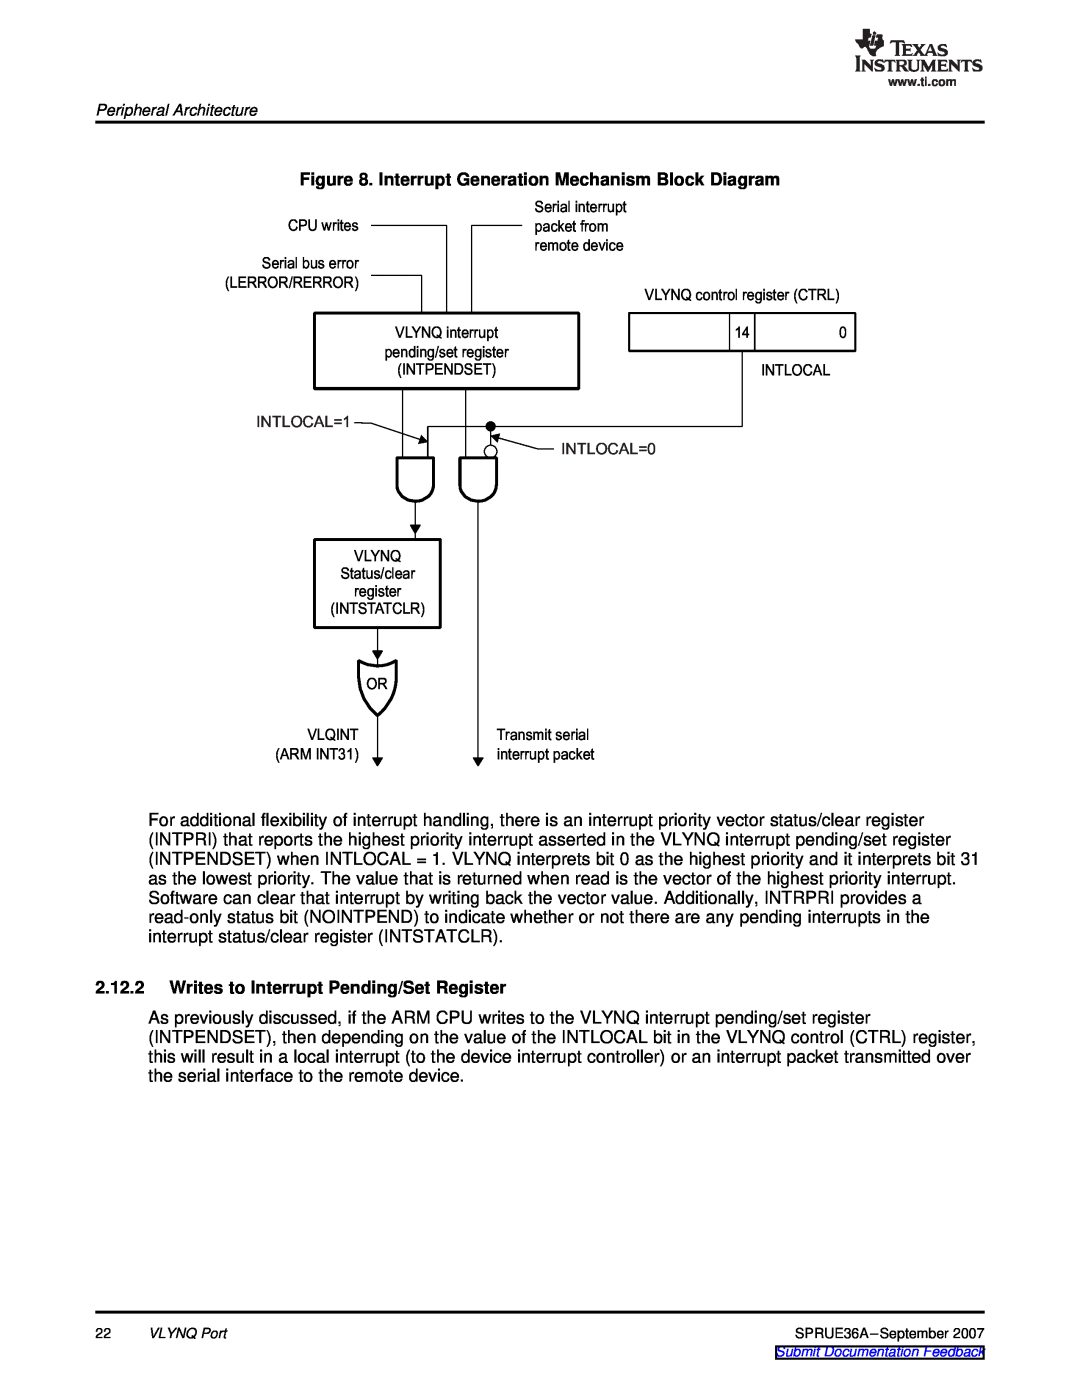 Texas Instruments VLYNQ Port manual Interrupt Generation Mechanism Block Diagram, Writes to Interrupt Pending/Set Register 